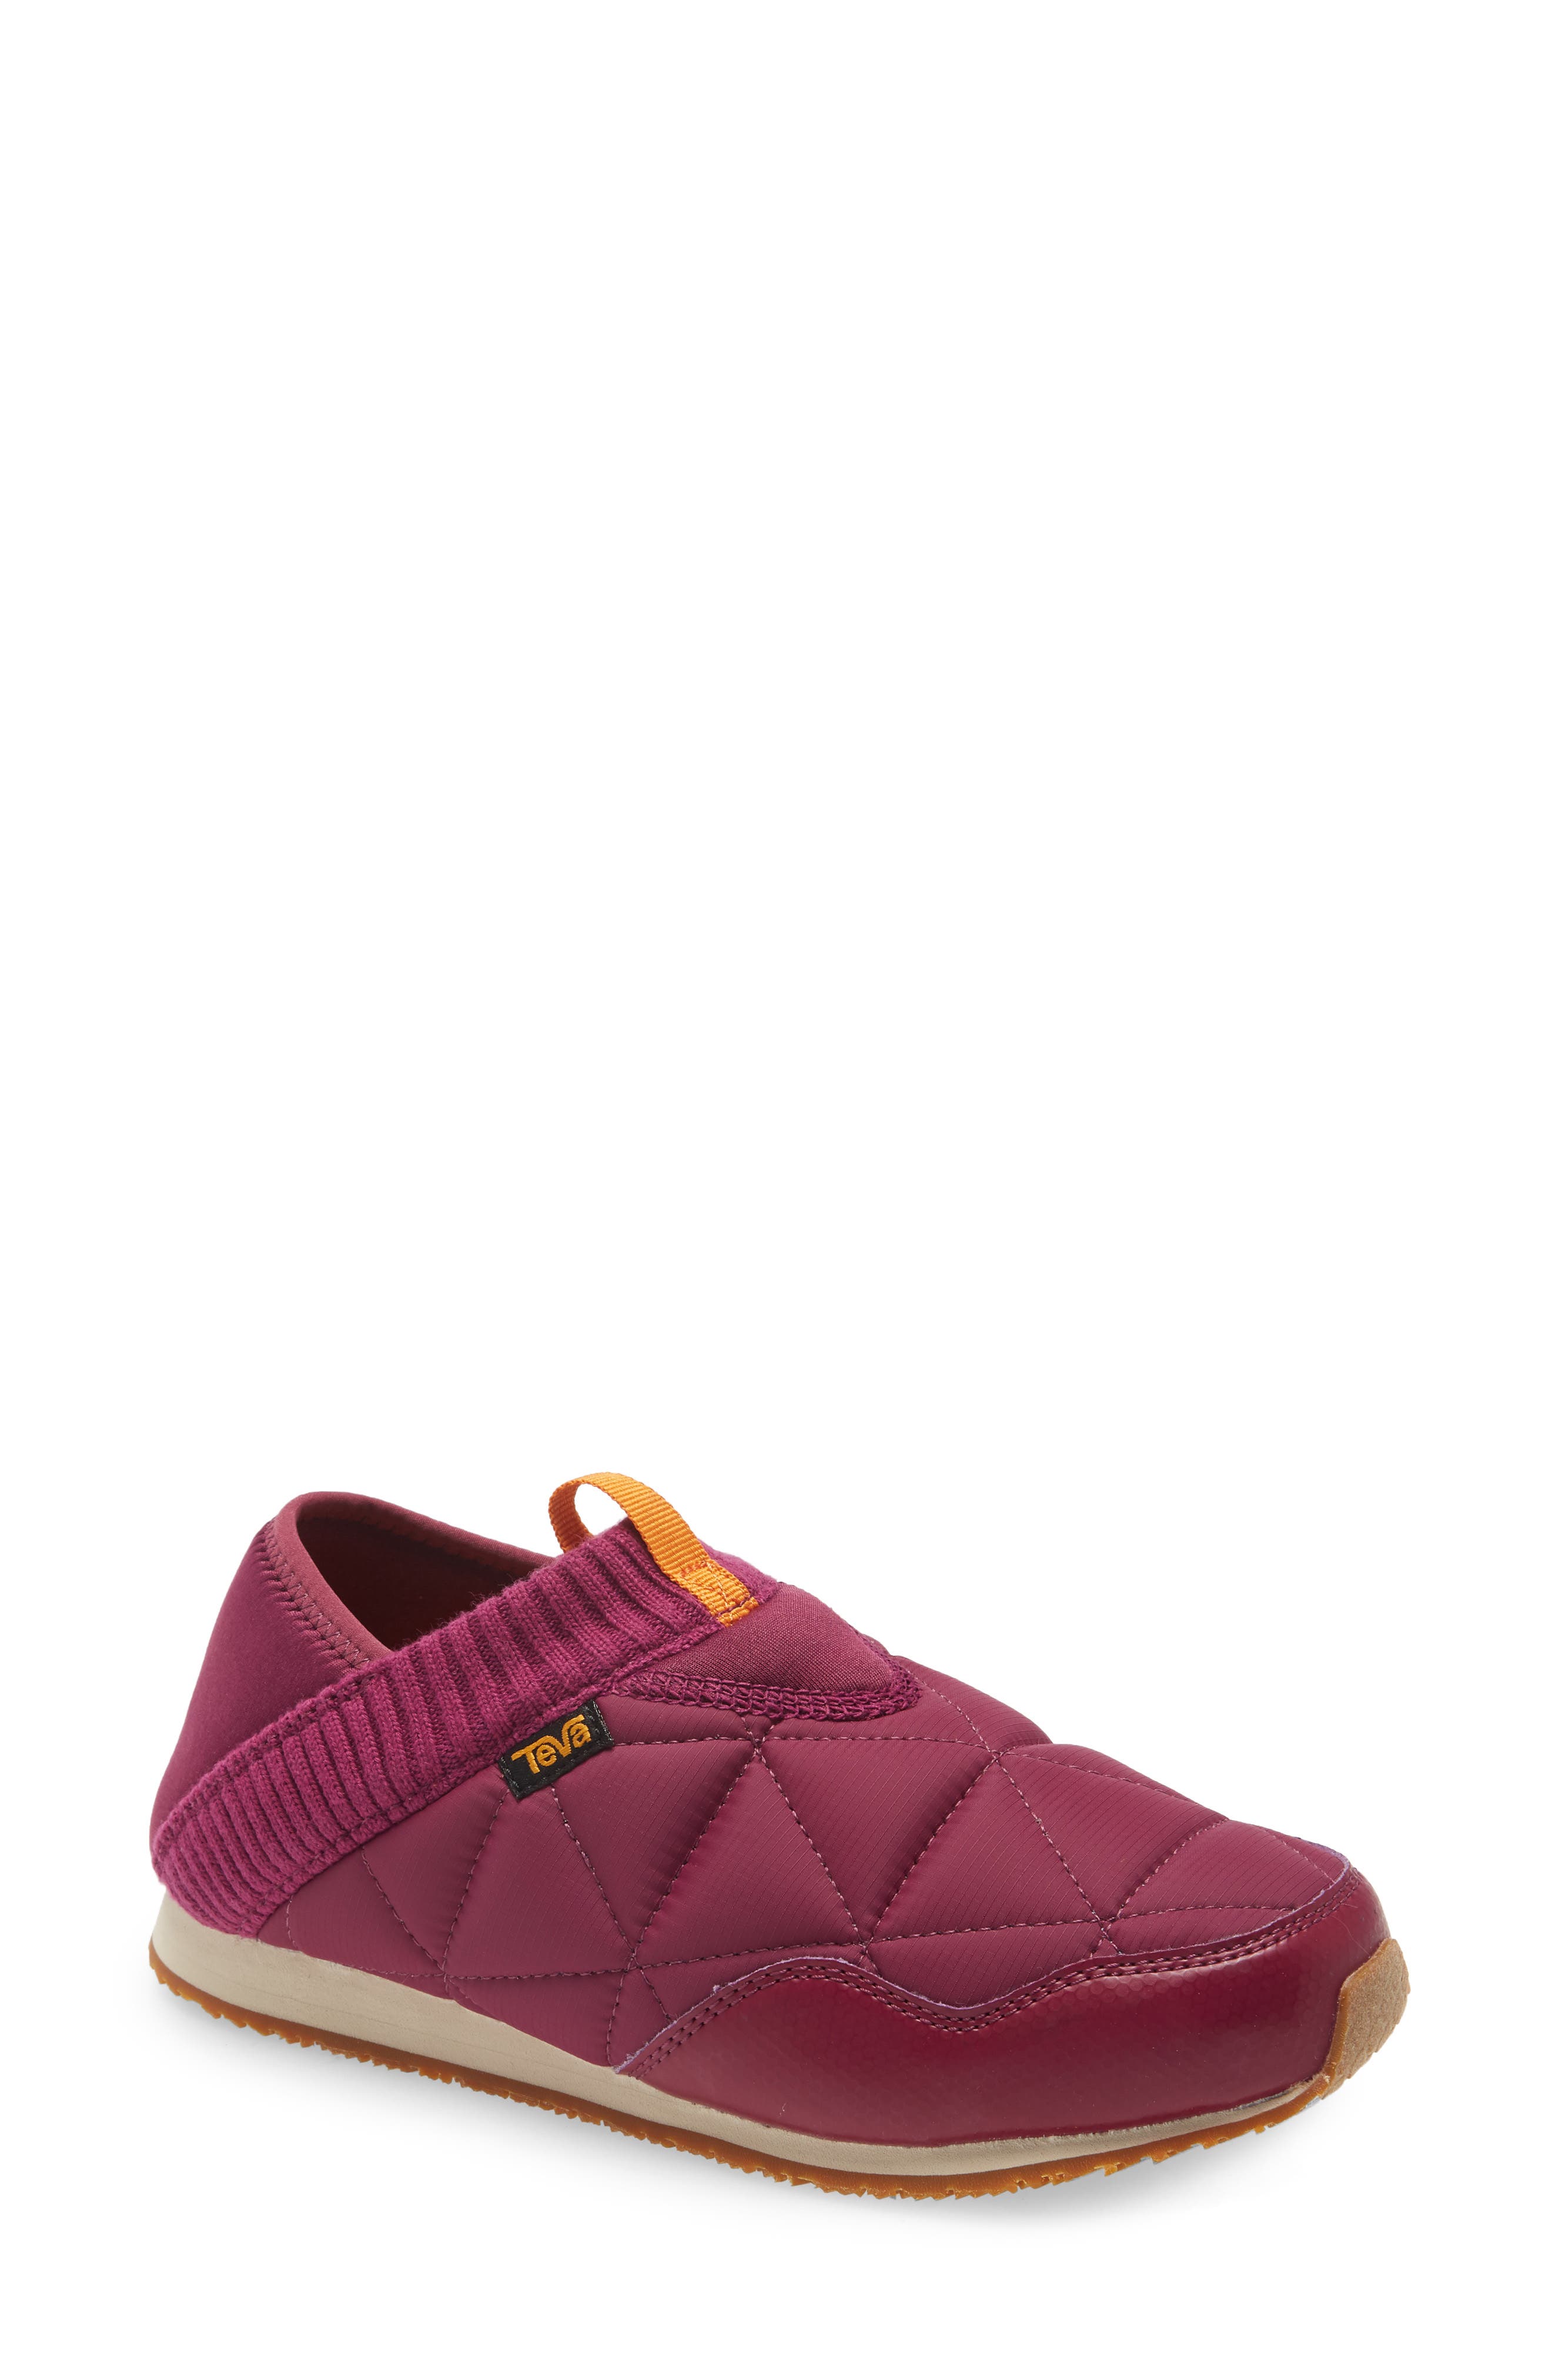 purple flats womens shoes